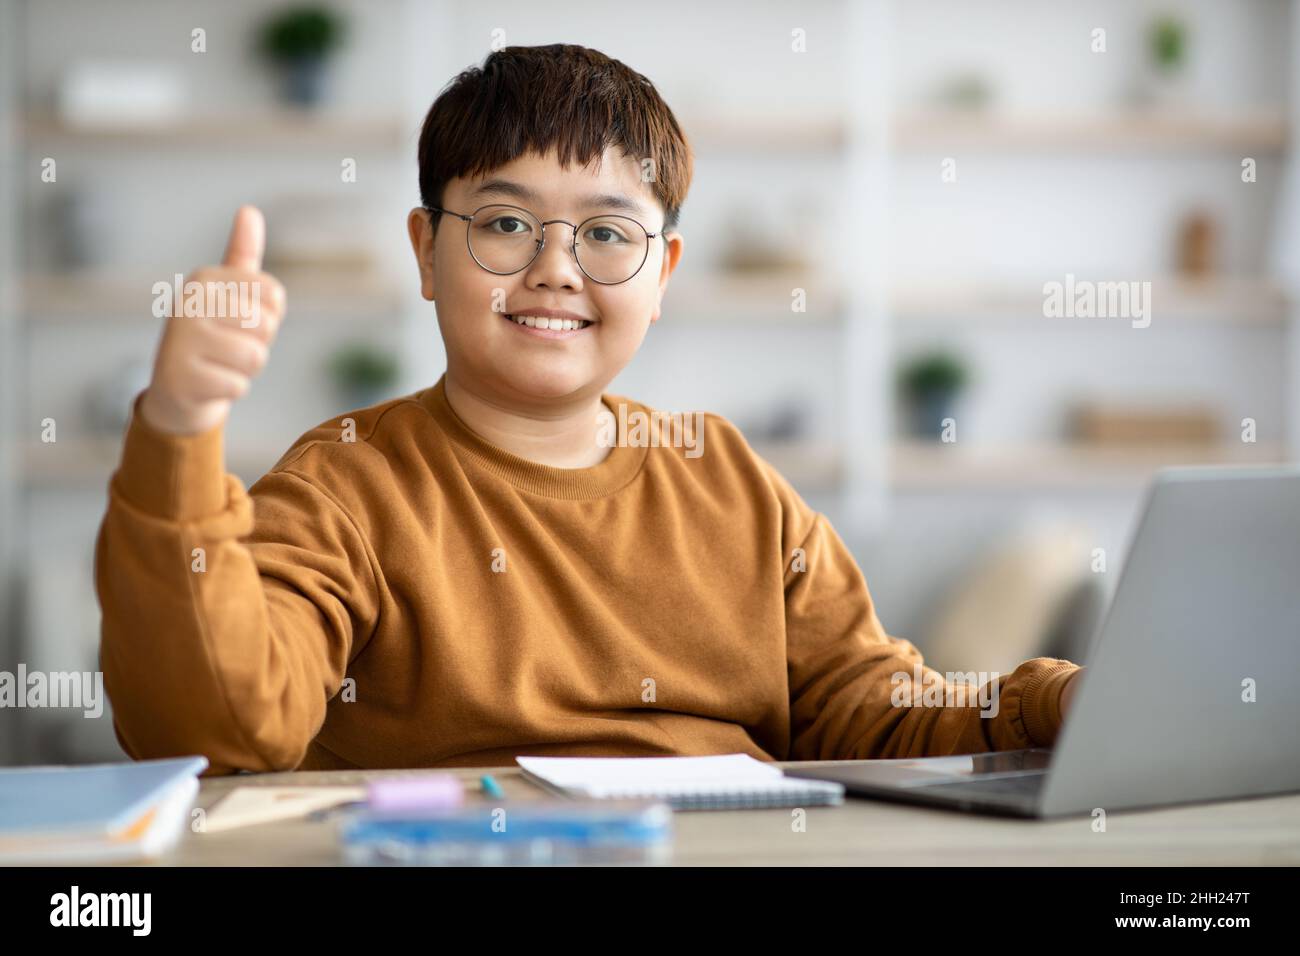 Happy teen boy sitting in front of computer, doing homework Stock Photo